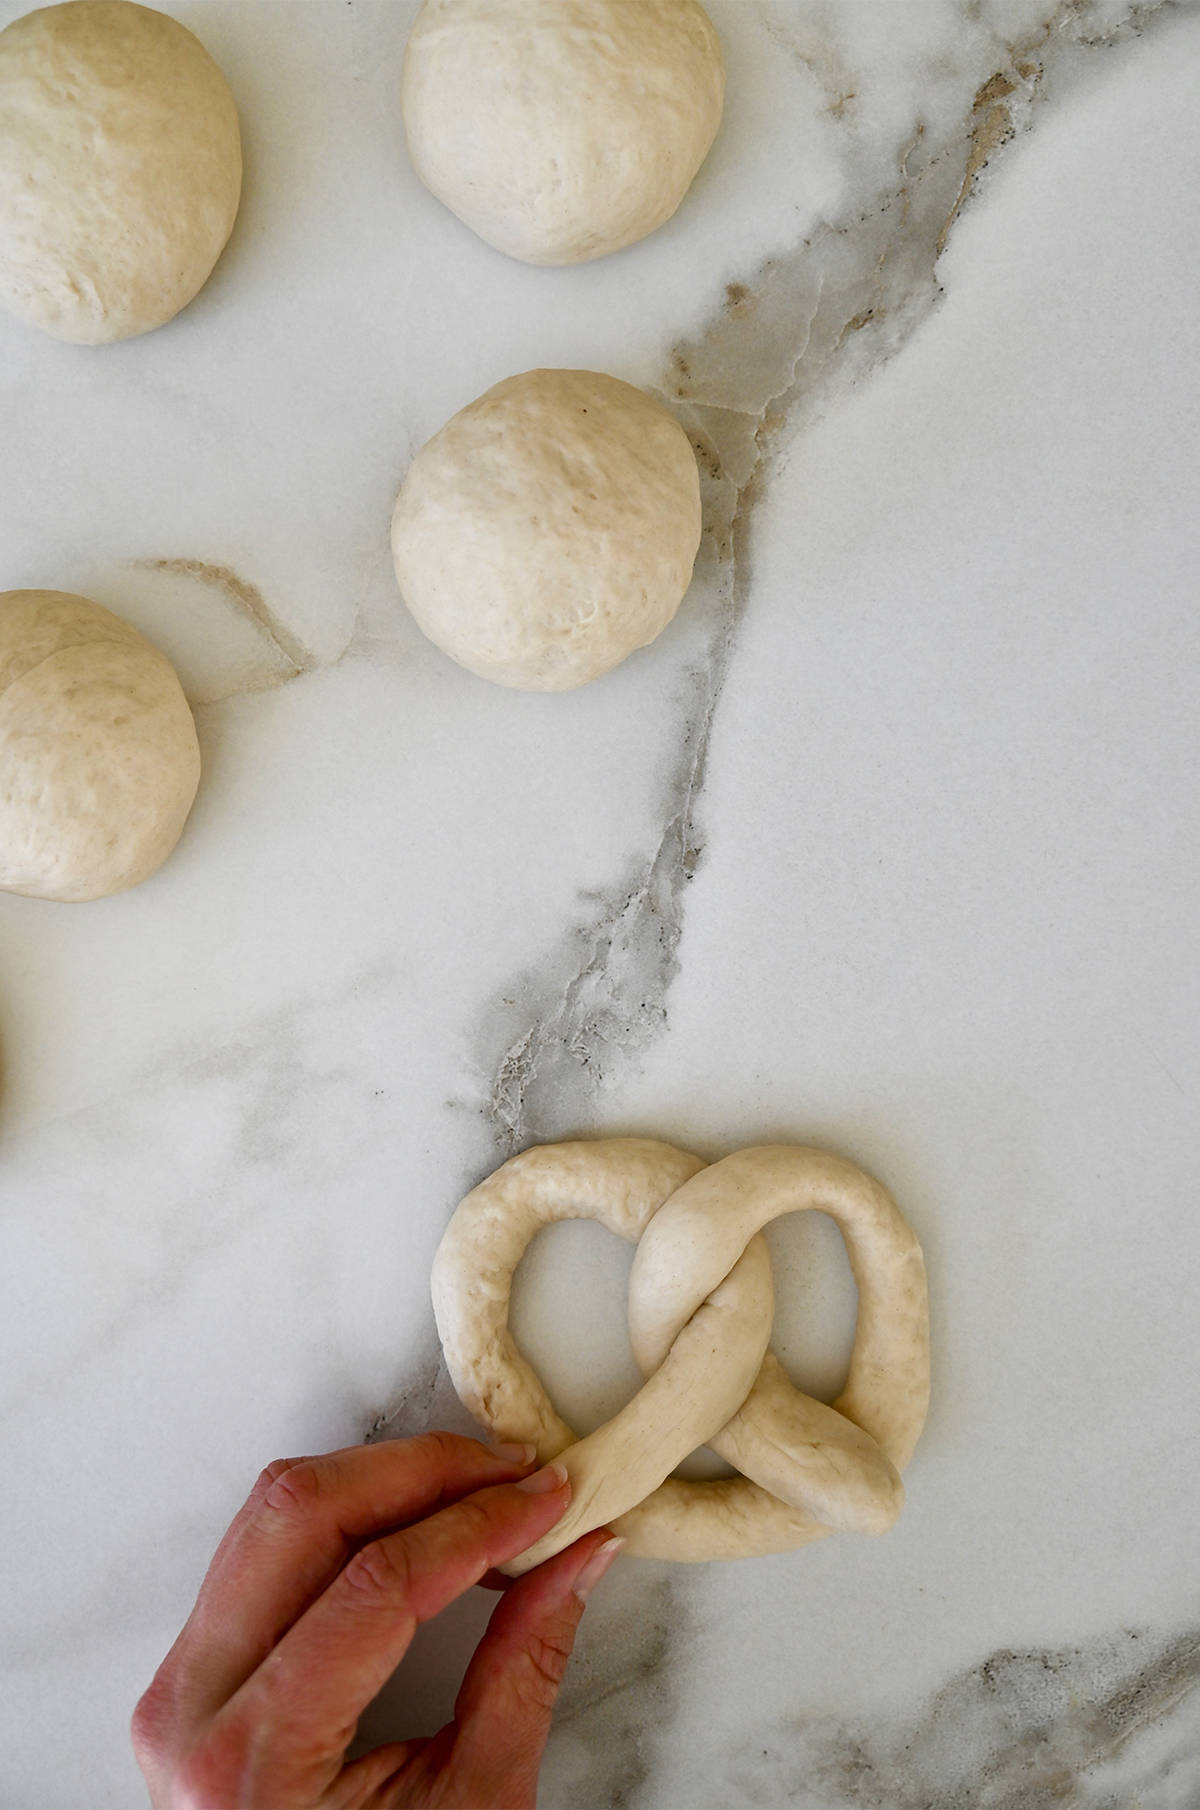 A hand twists dough into a classic pretzel shape.